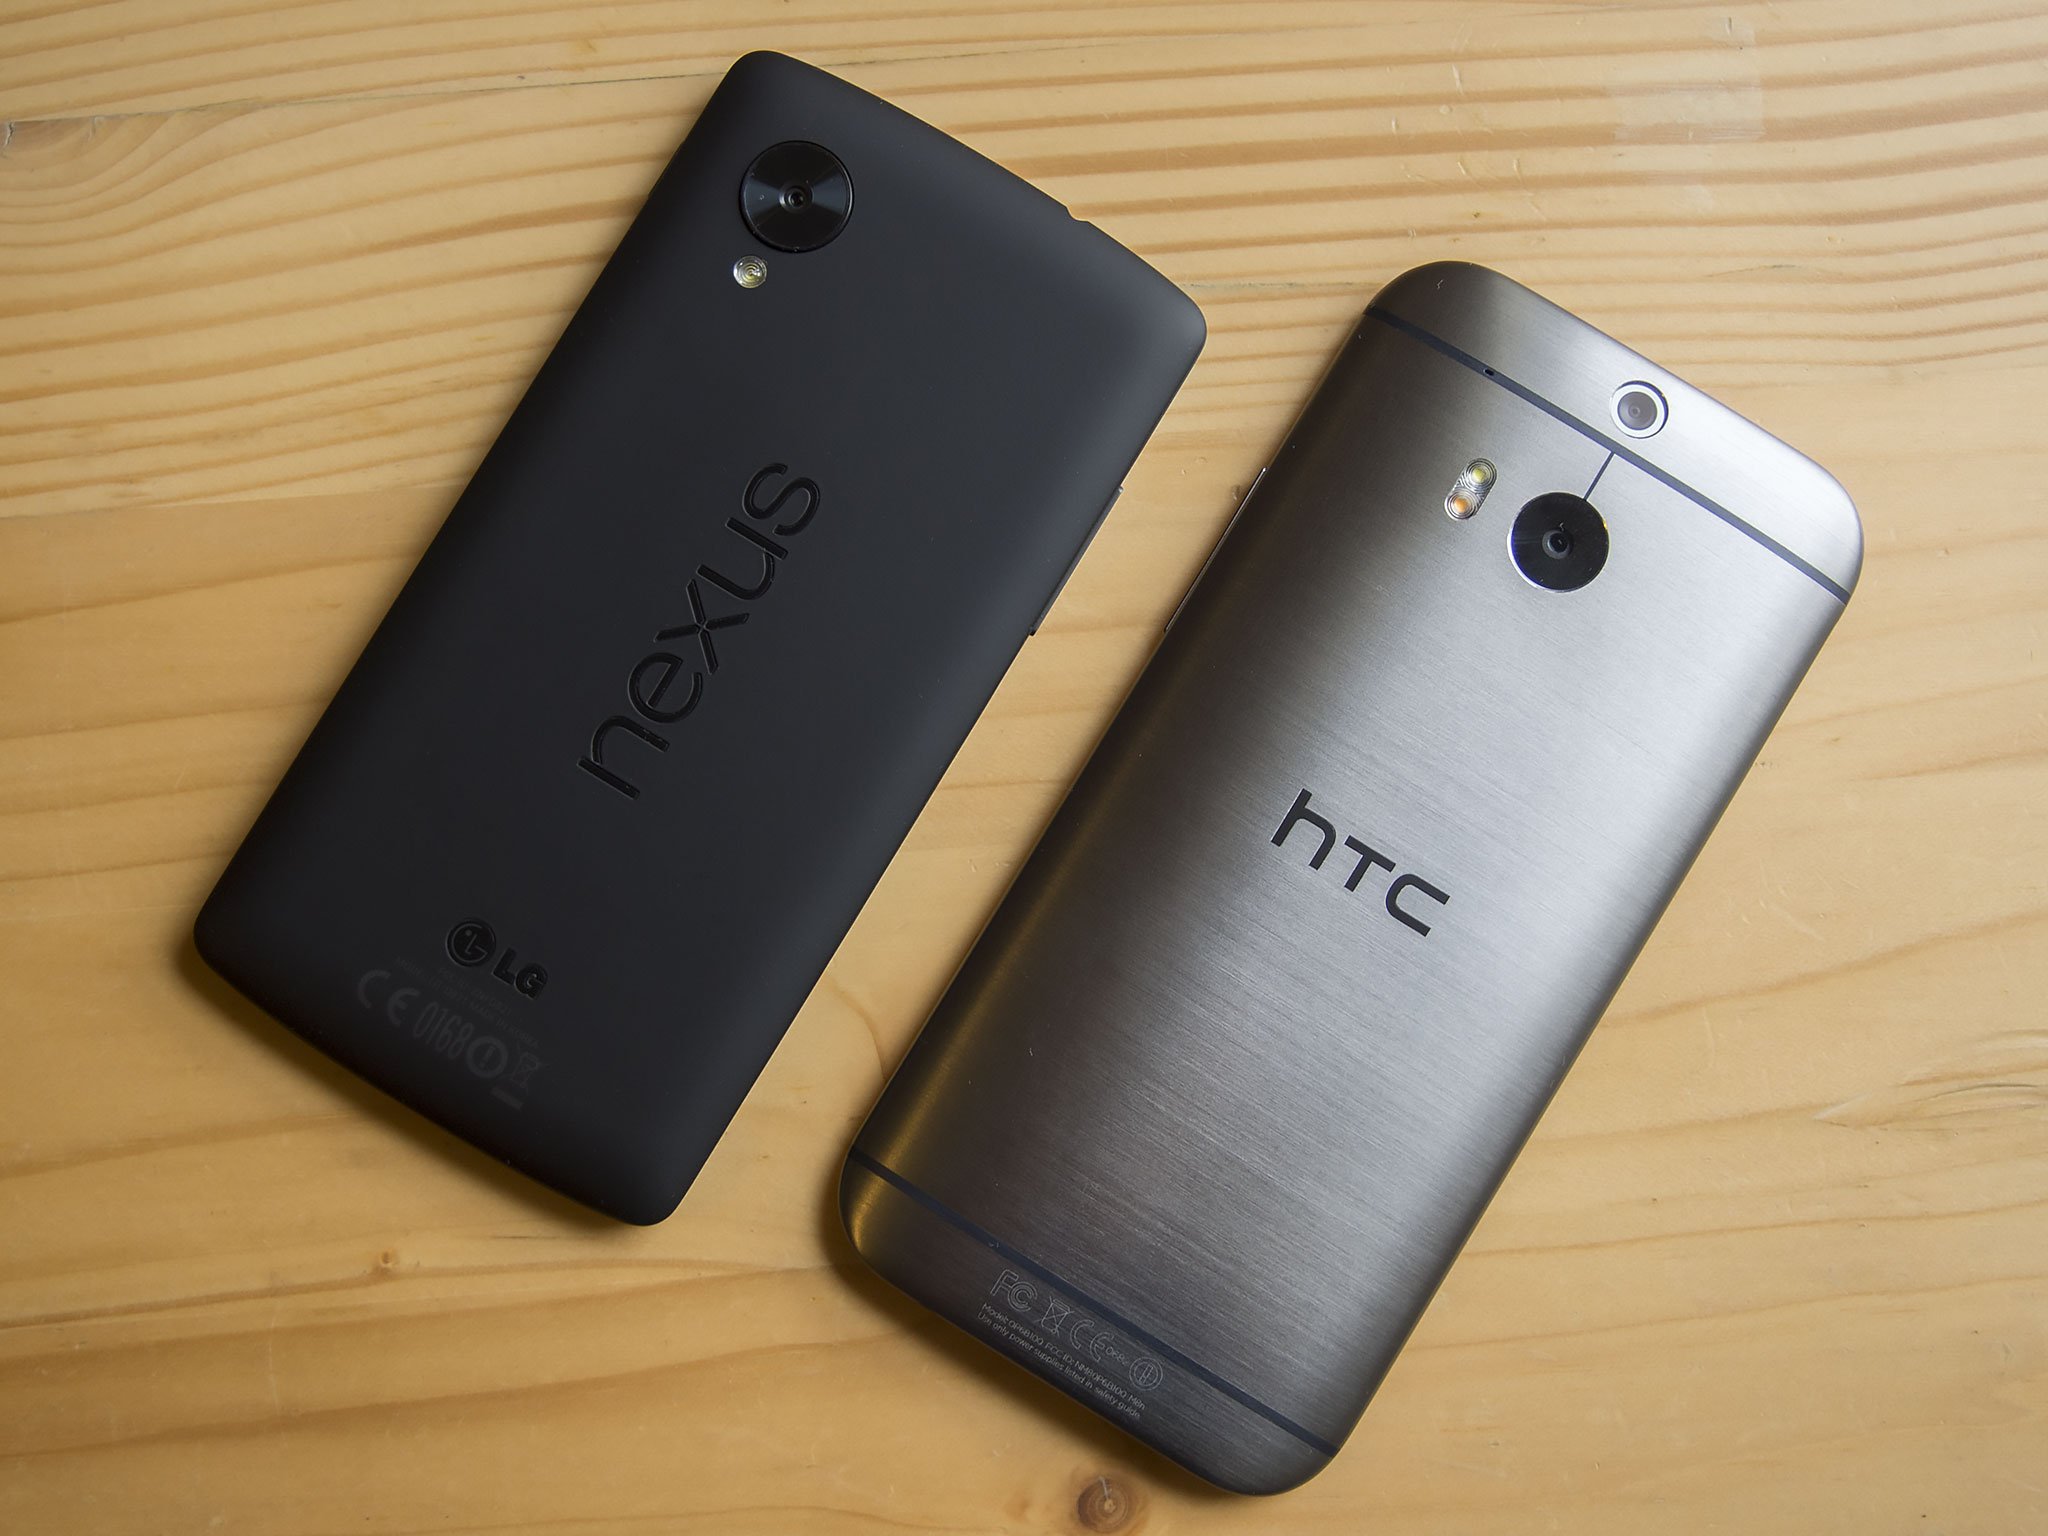 Nexus 5, HTC One M8